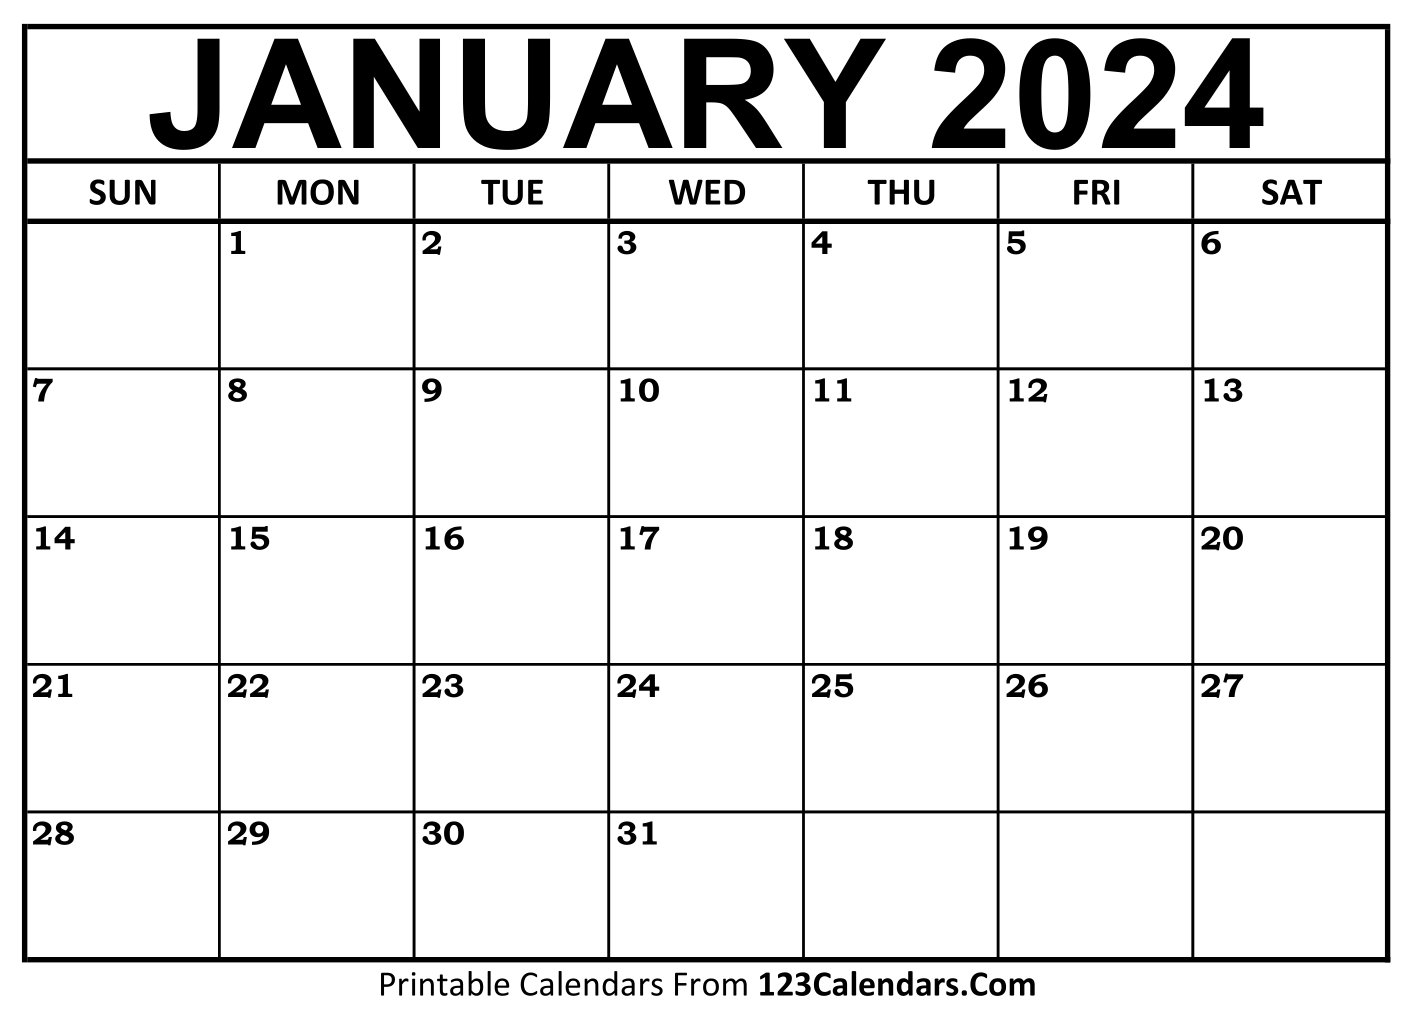 Printable January 2024 Calendar Templates - 123Calendars for January 2024 Month Calendar Printable